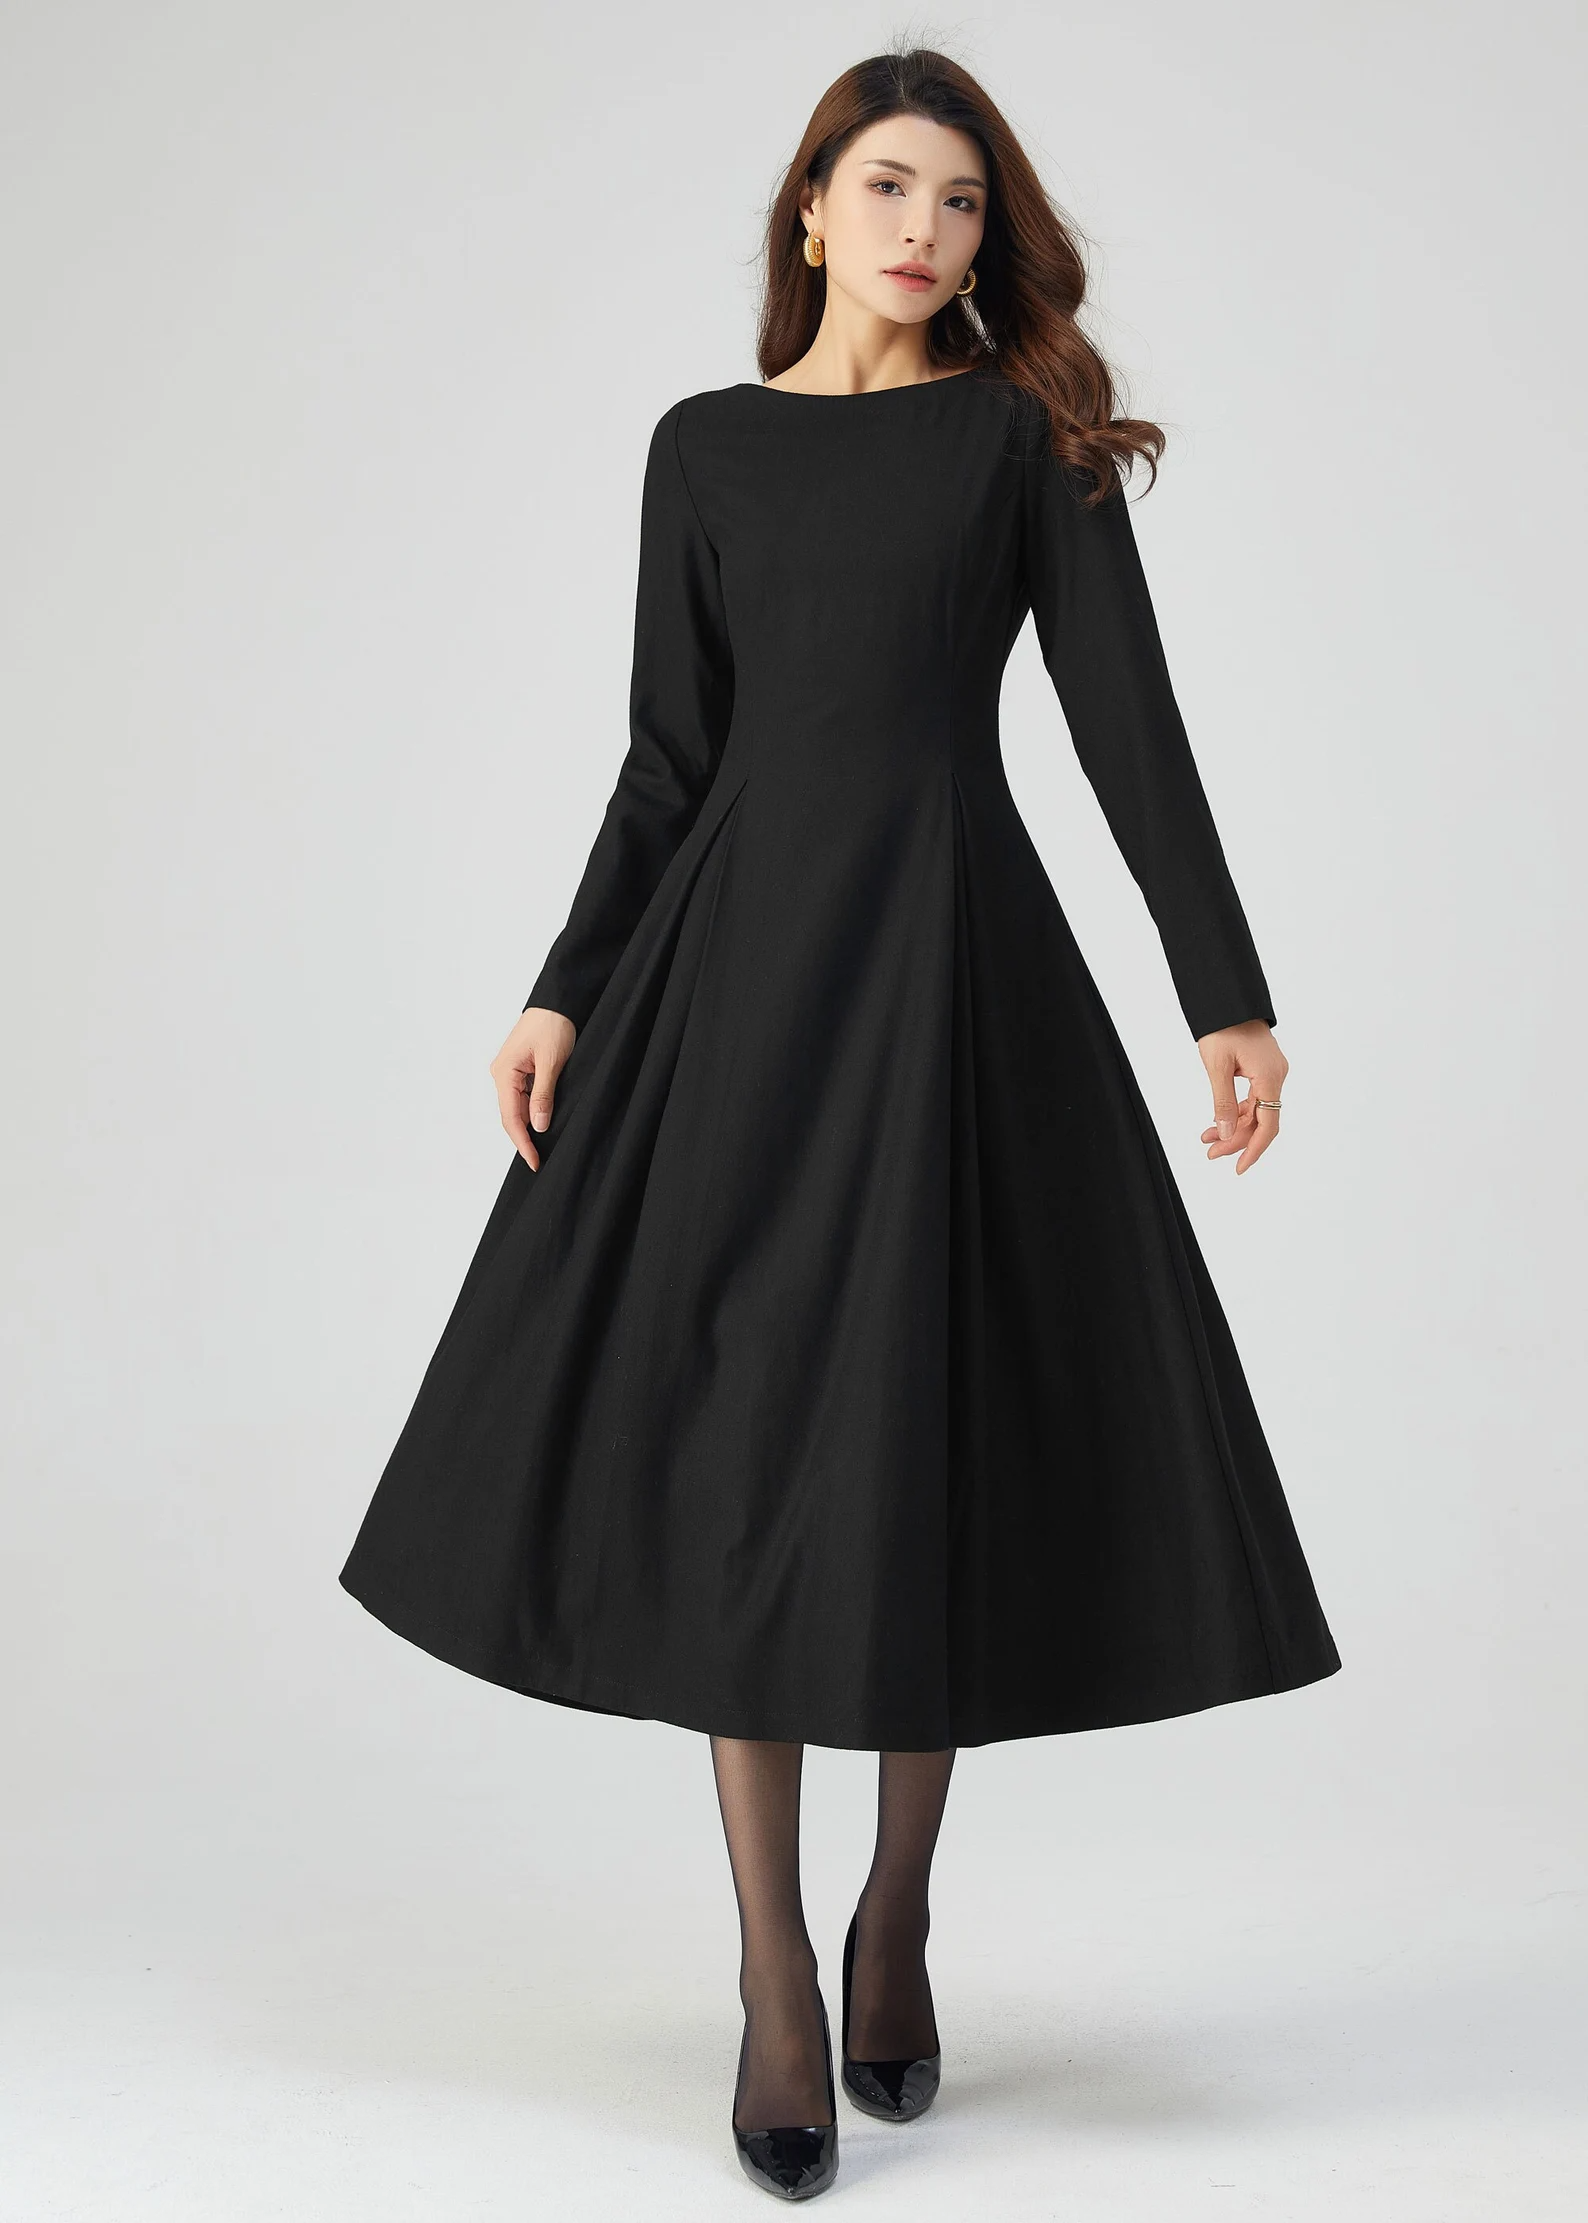 Black Dress, Wool Dress Women, Winter Dress, Fit and Flare Dress